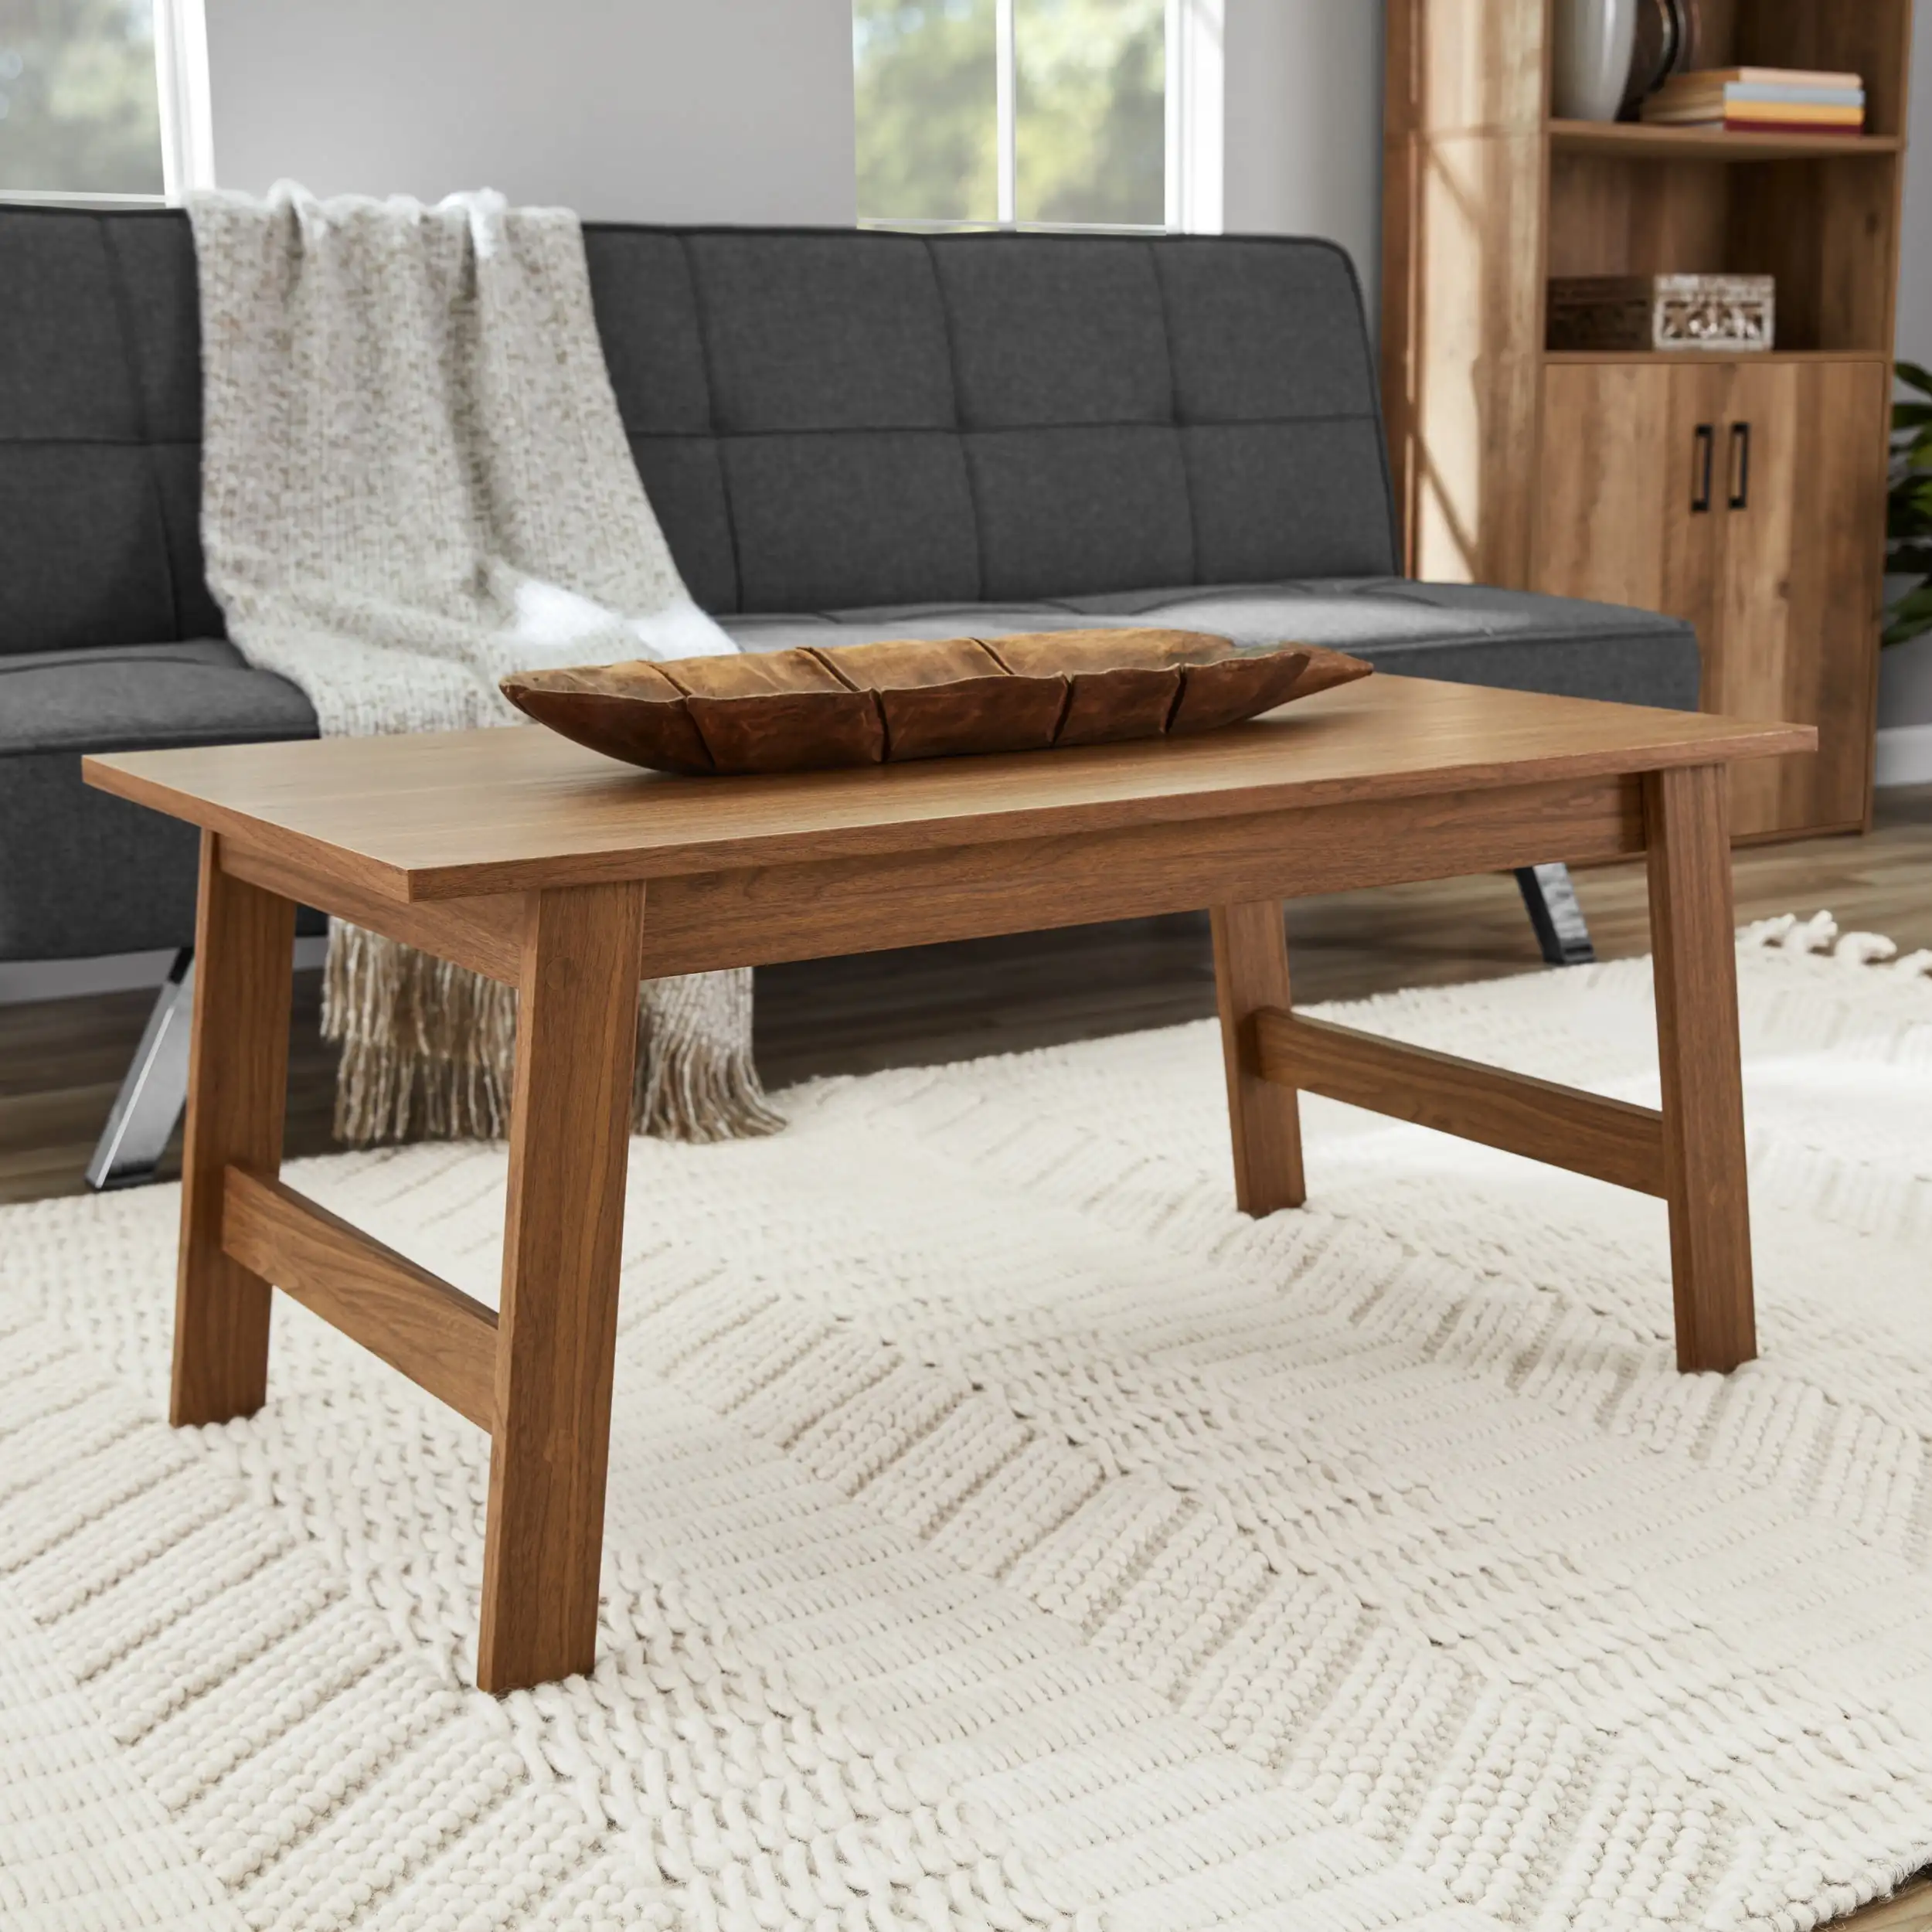 

Mainstays Wood Rectangle Coffee Table, Walnut Finish living room furniture